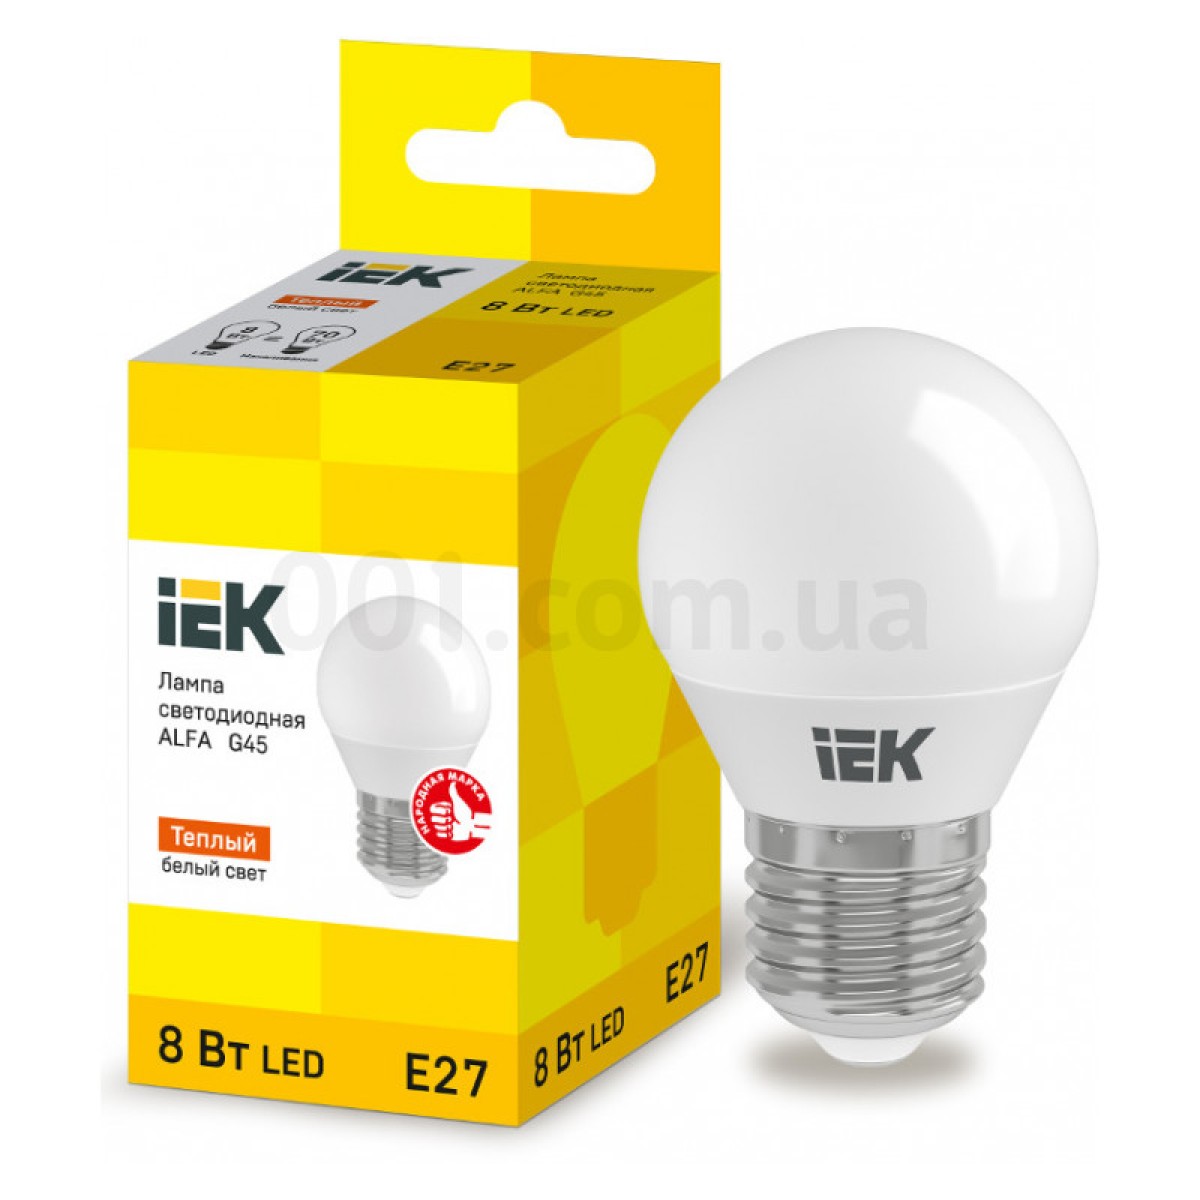 Светодиодная лампа LED ALFA G45 (шар) 8 Вт 230В 3000К E27, IEK 256_256.jpg